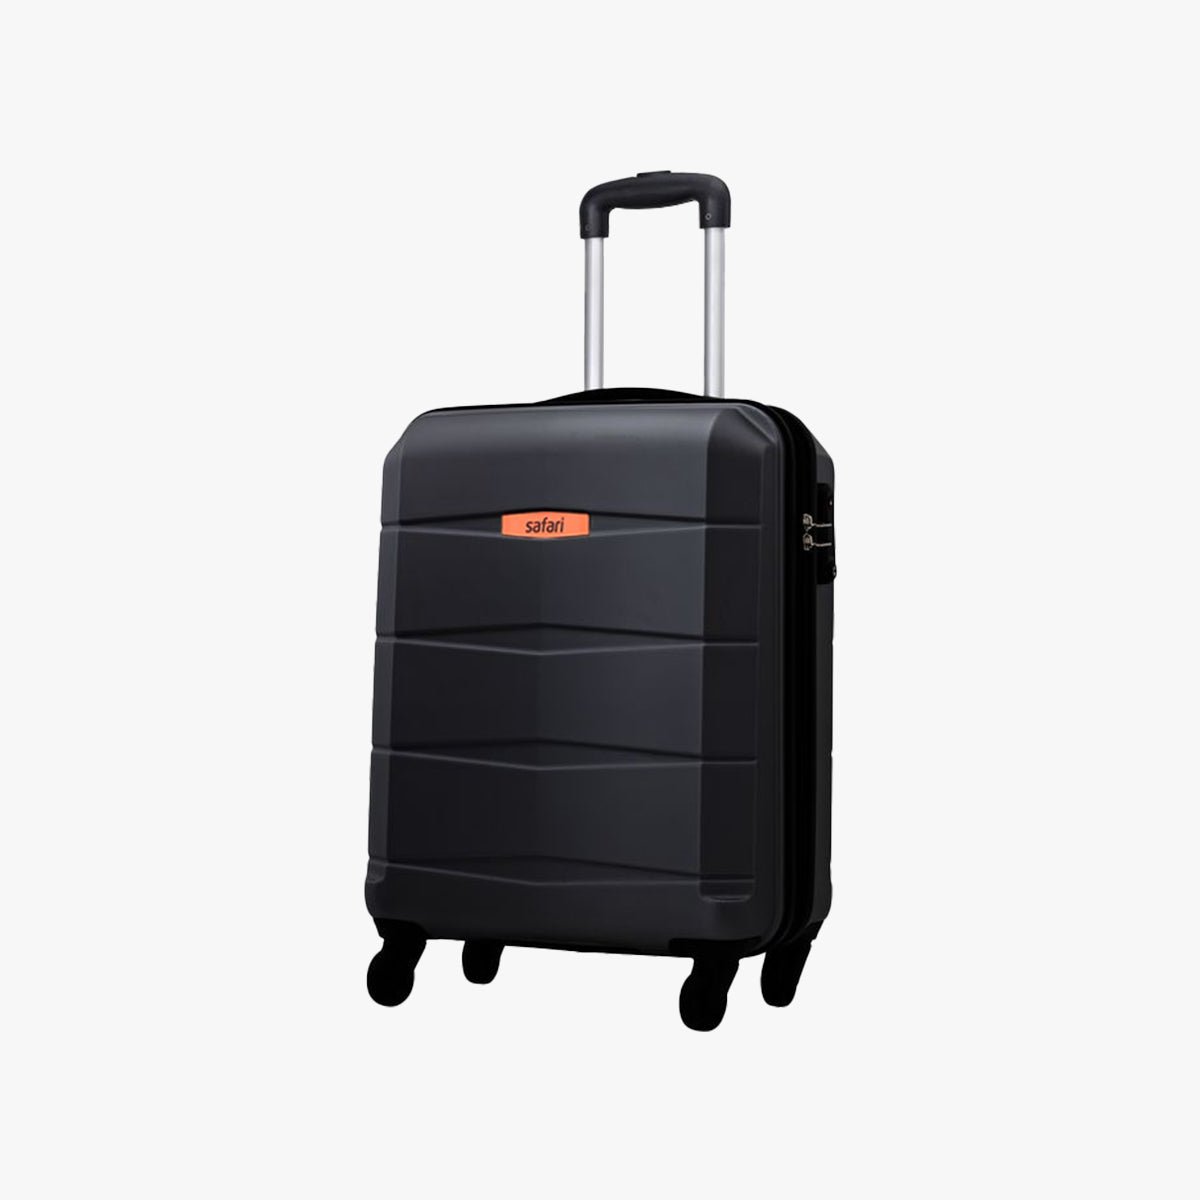 Regloss Antiscratch Hard Luggage - Black